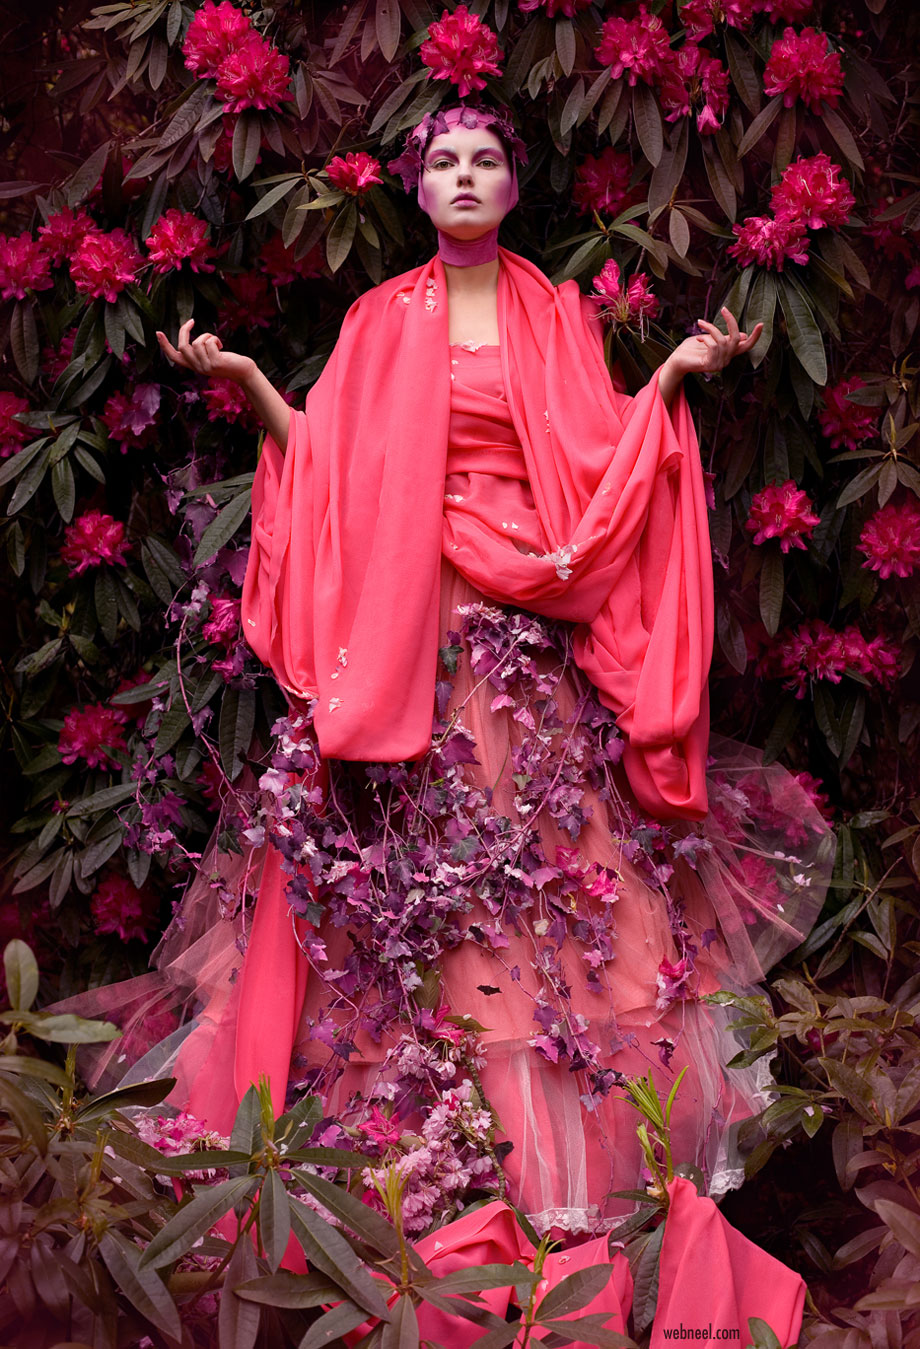 fantasy photography portrait the pink saint